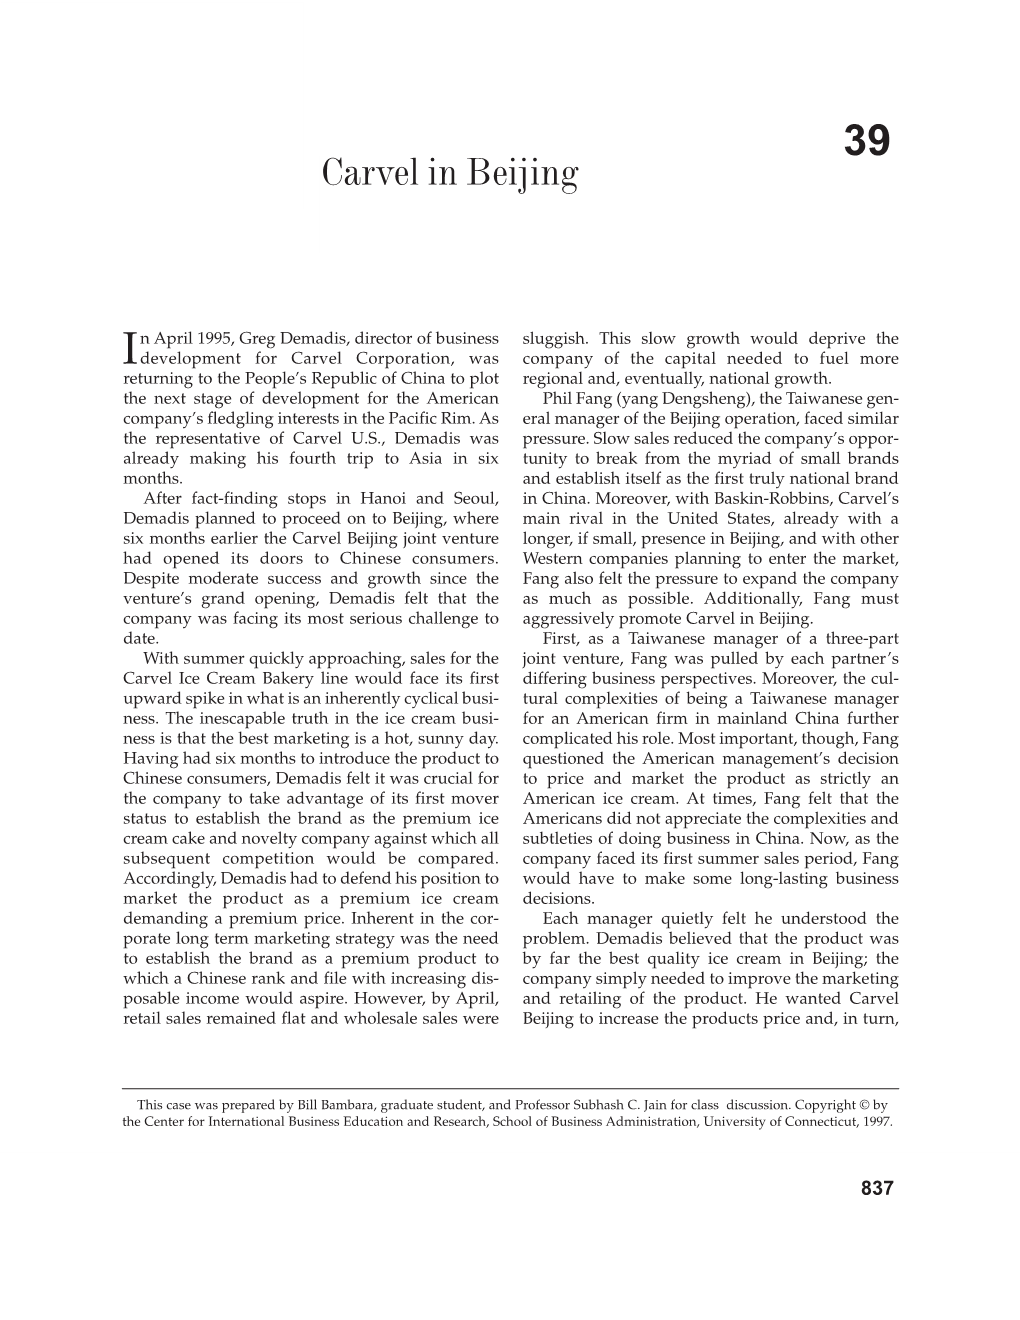 CASE 21 Carvel in Beijing